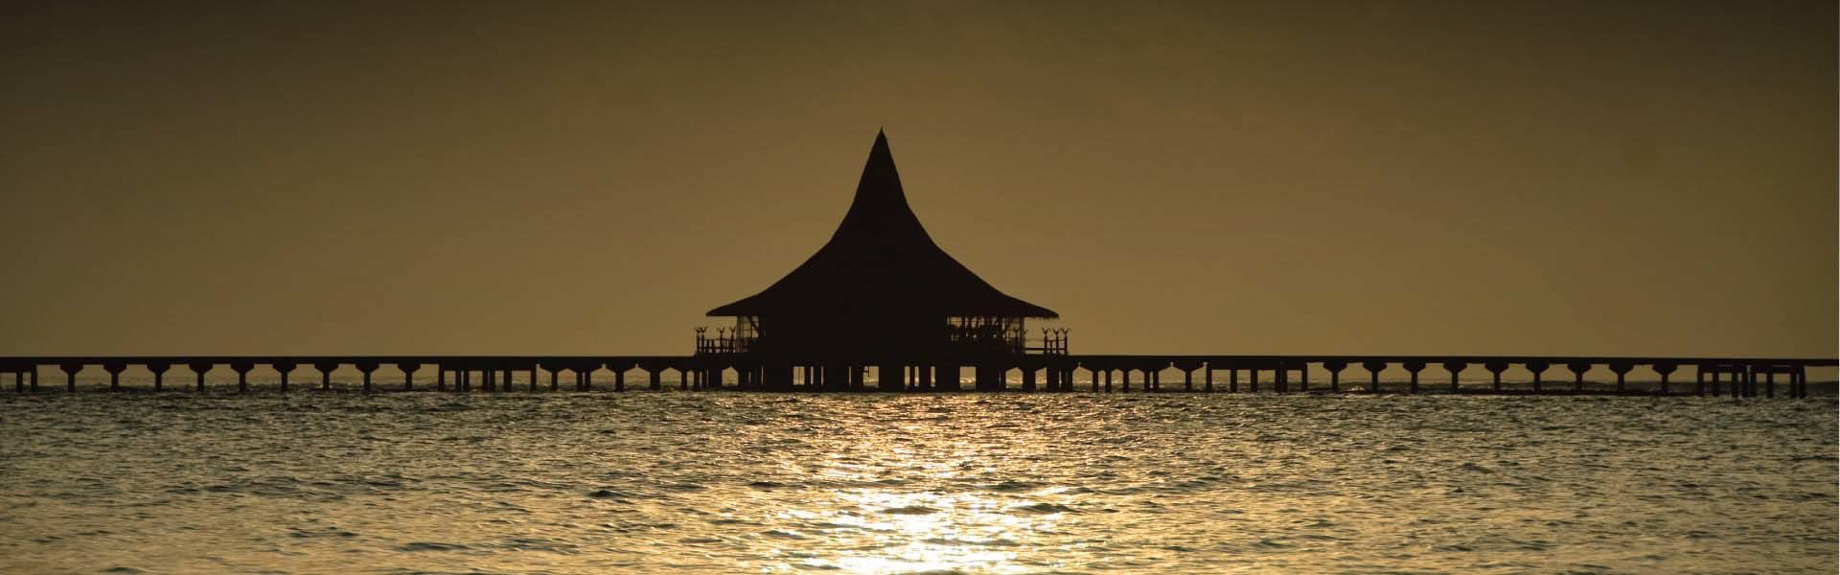 Anantara Veli Maldives Resort – South Male Atoll, Maldives – Baan Huraa Restaurant